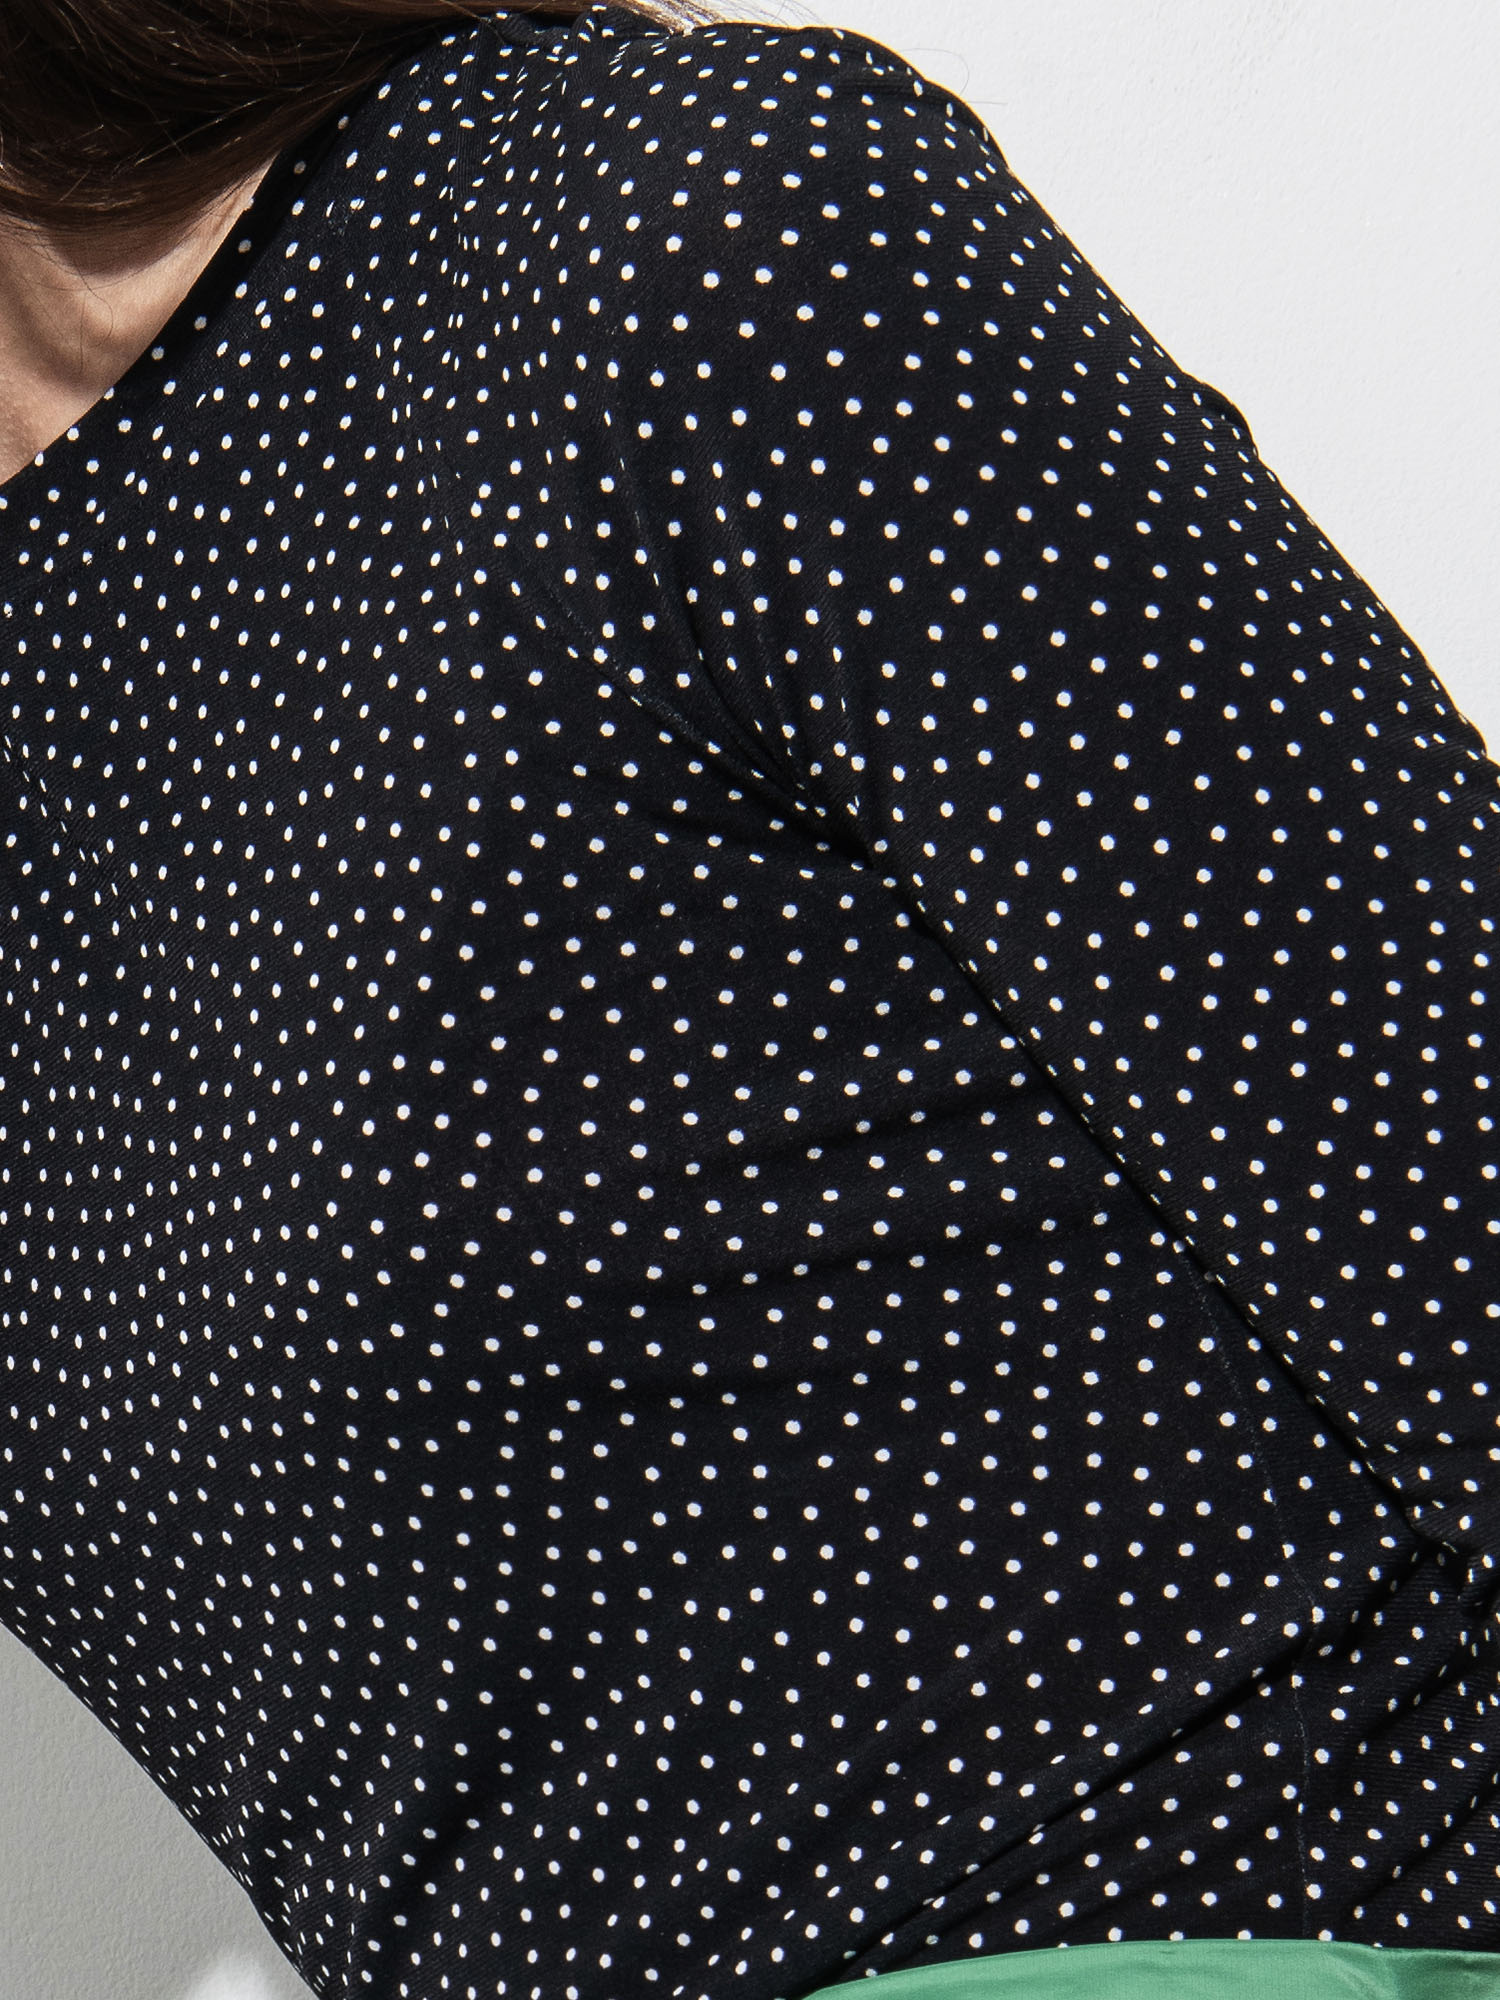 Polka dot stretchy blouse detail • Sassa Björg